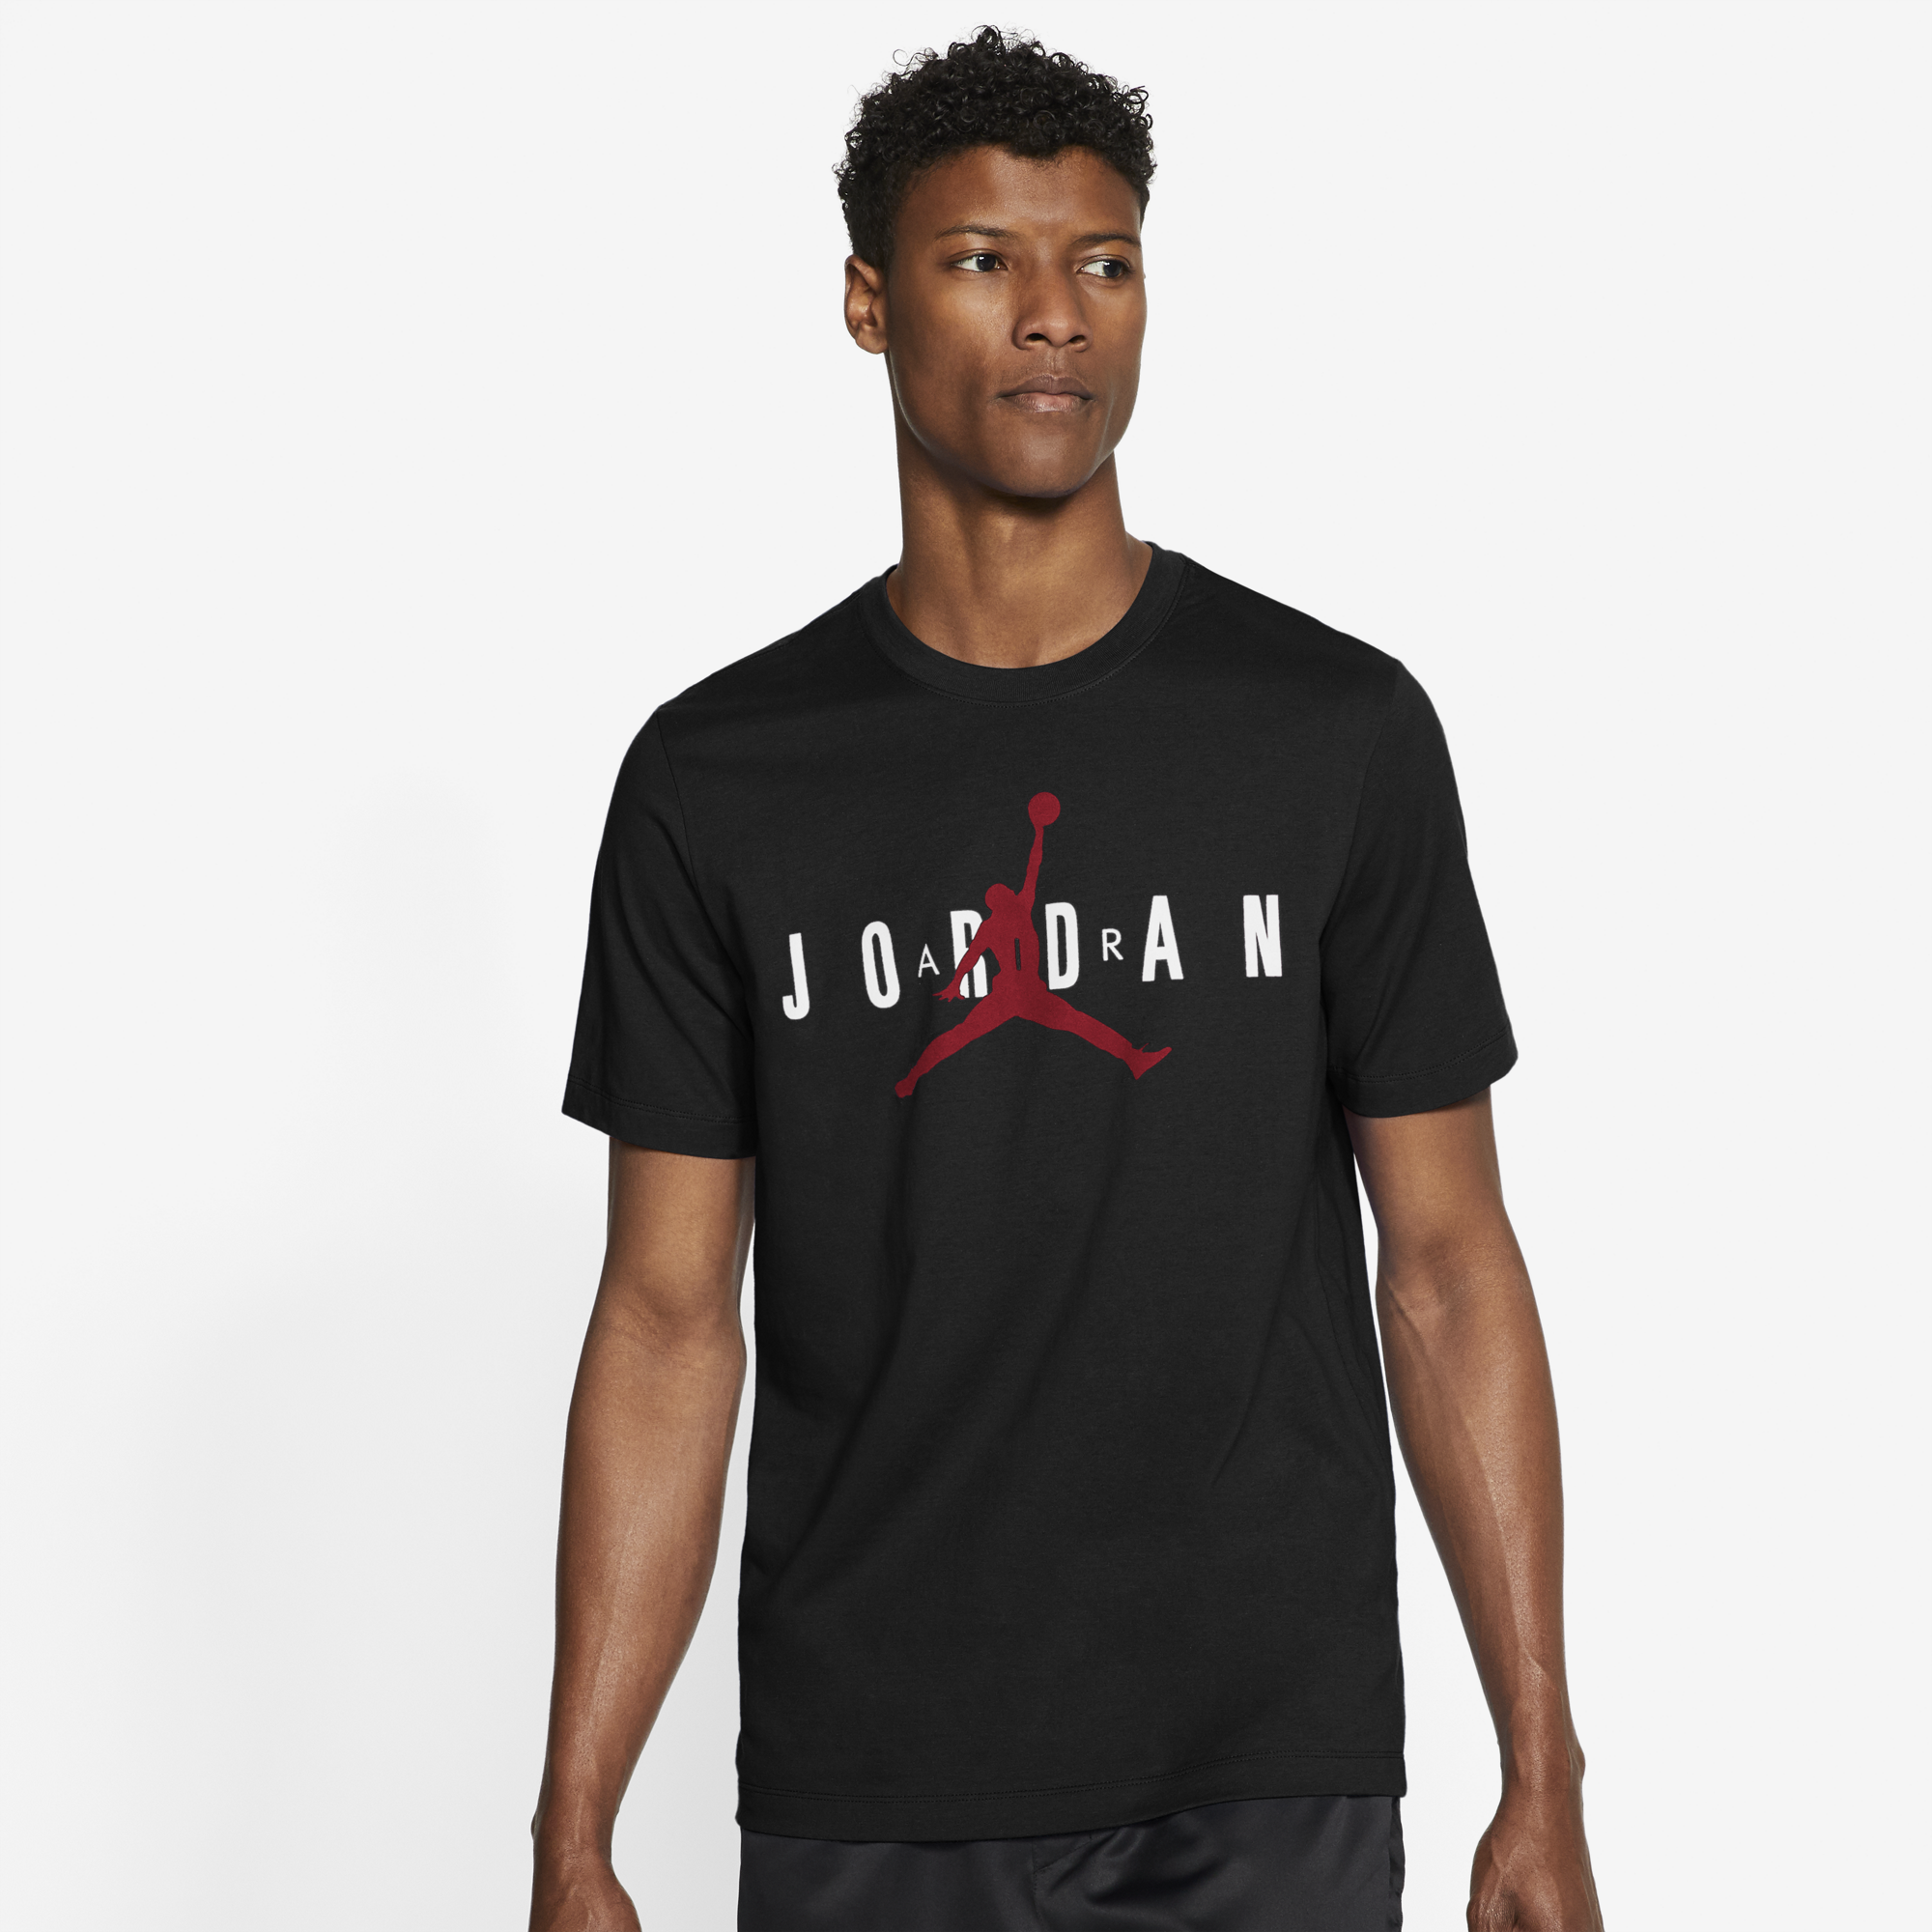 eastbay jordan t shirt